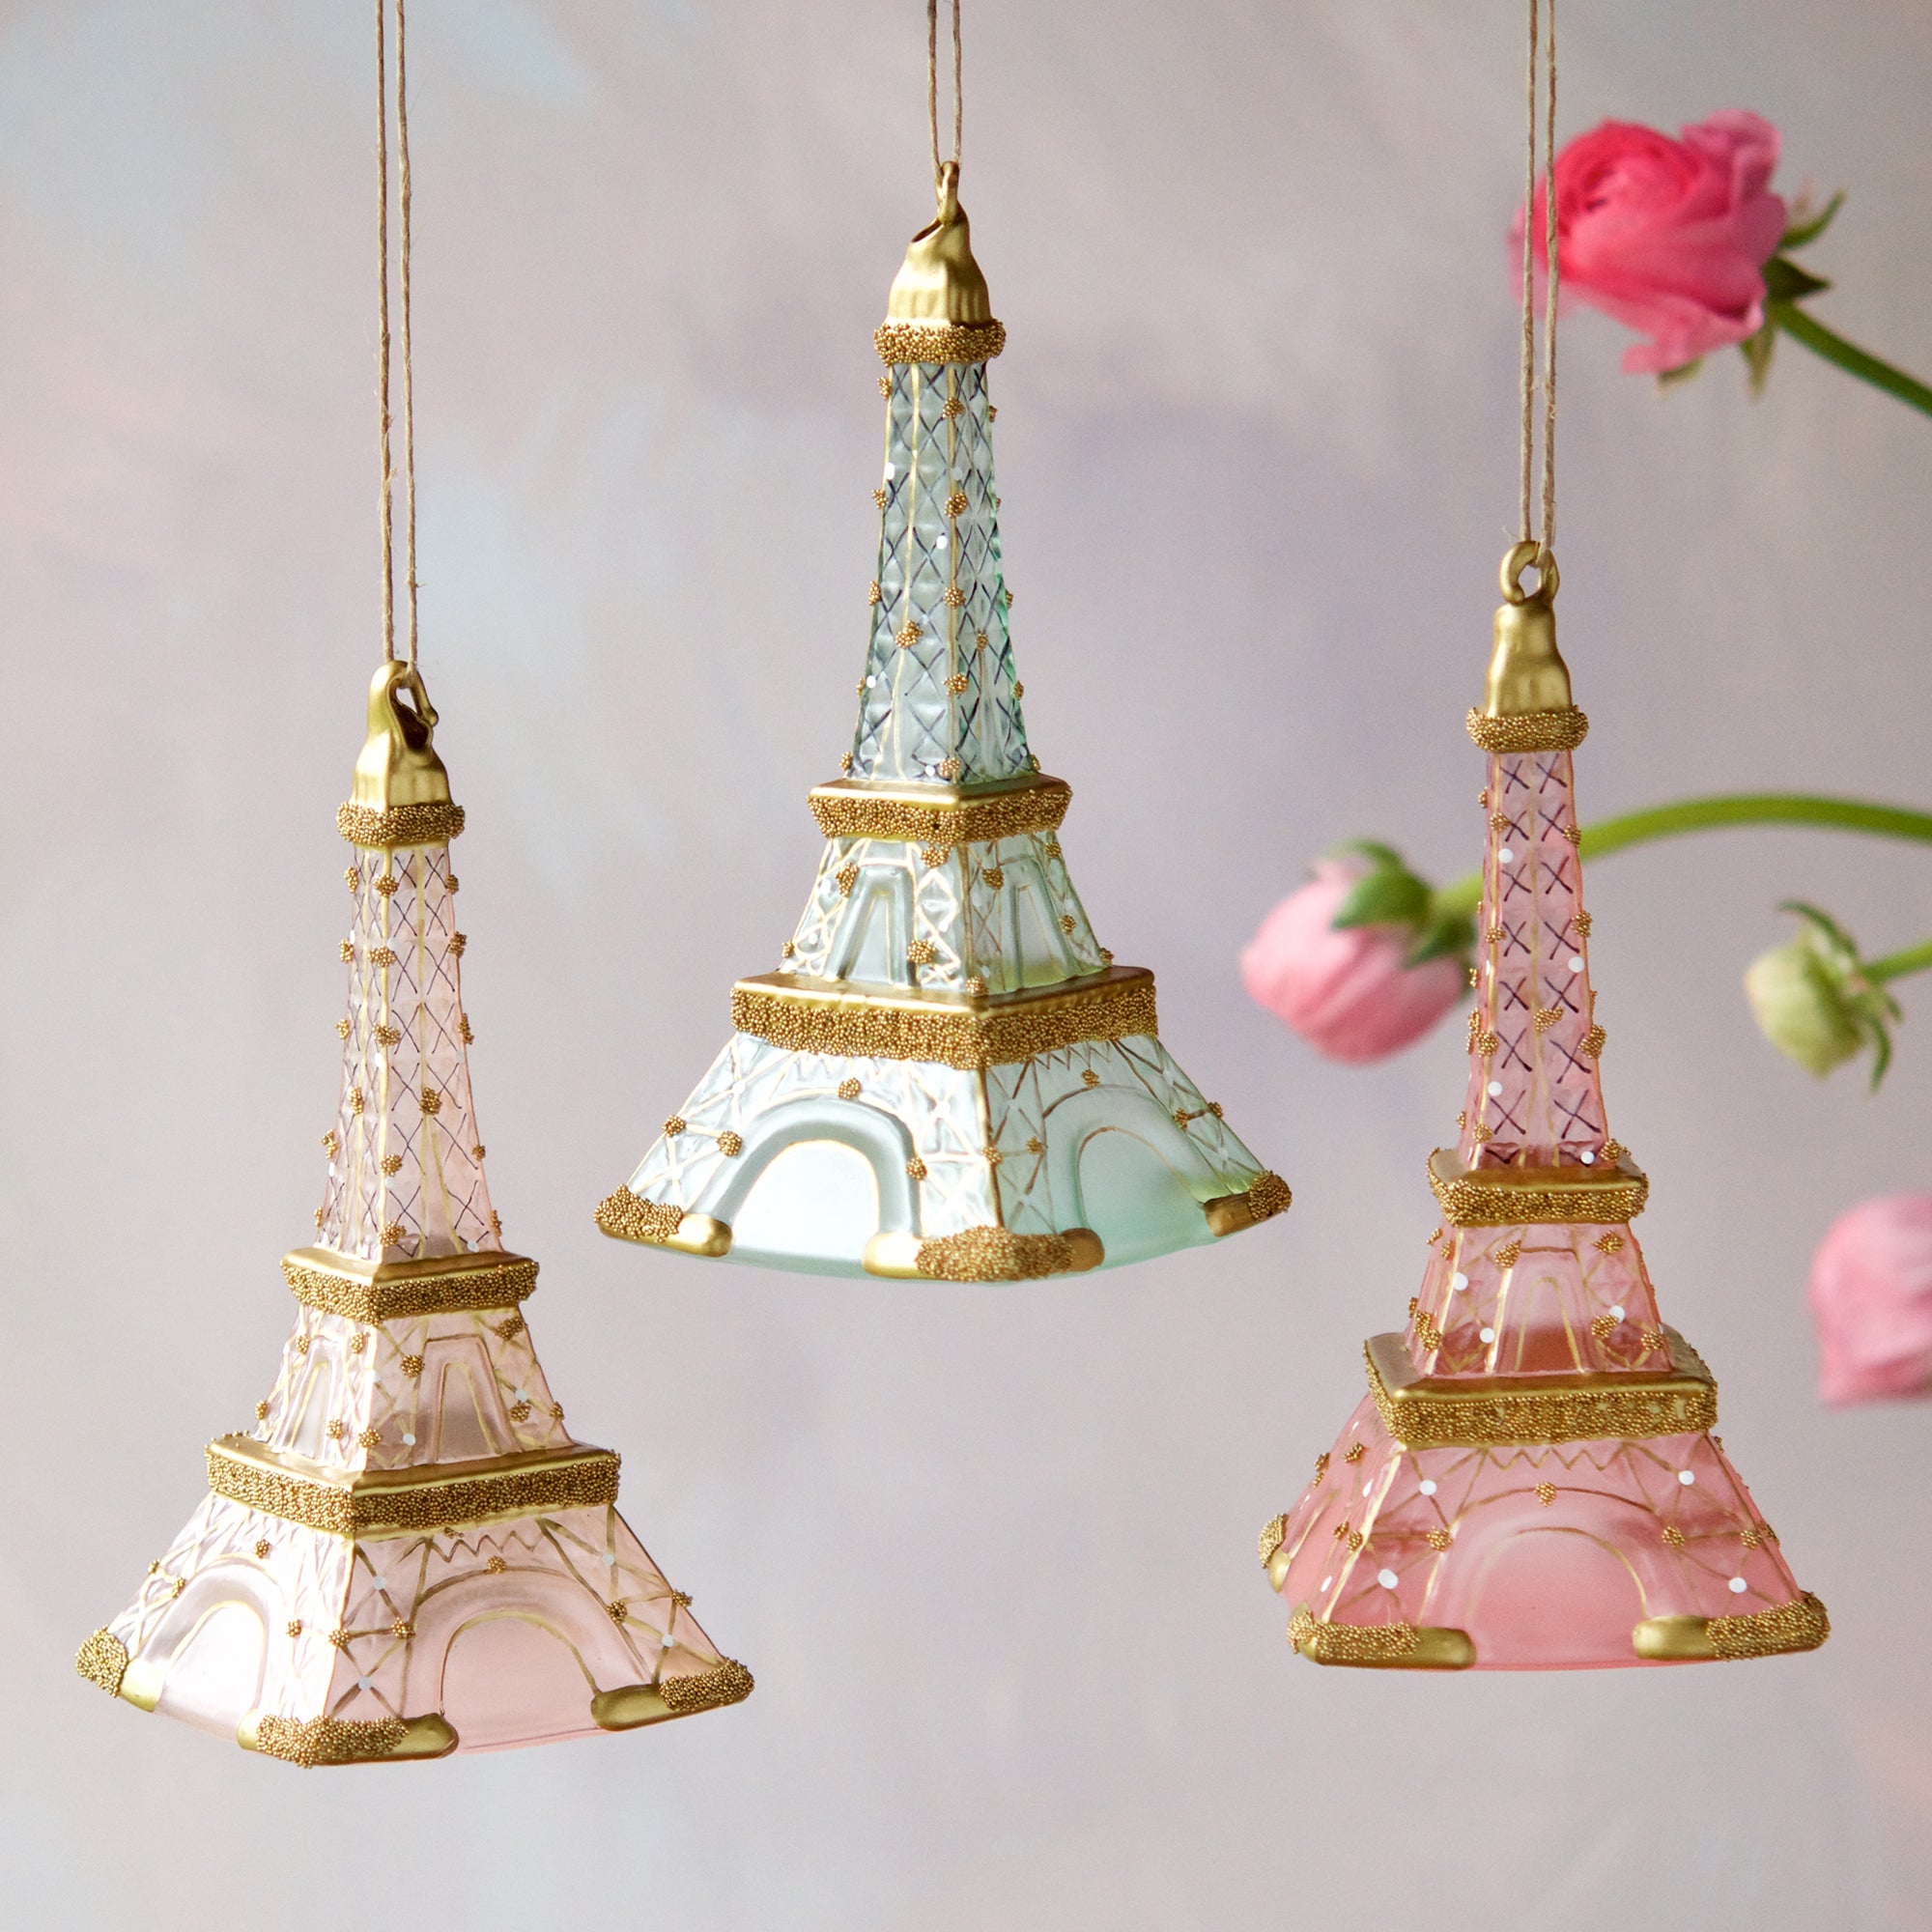 Crusted Eiffel Tower Ornament - Glitterville Studios